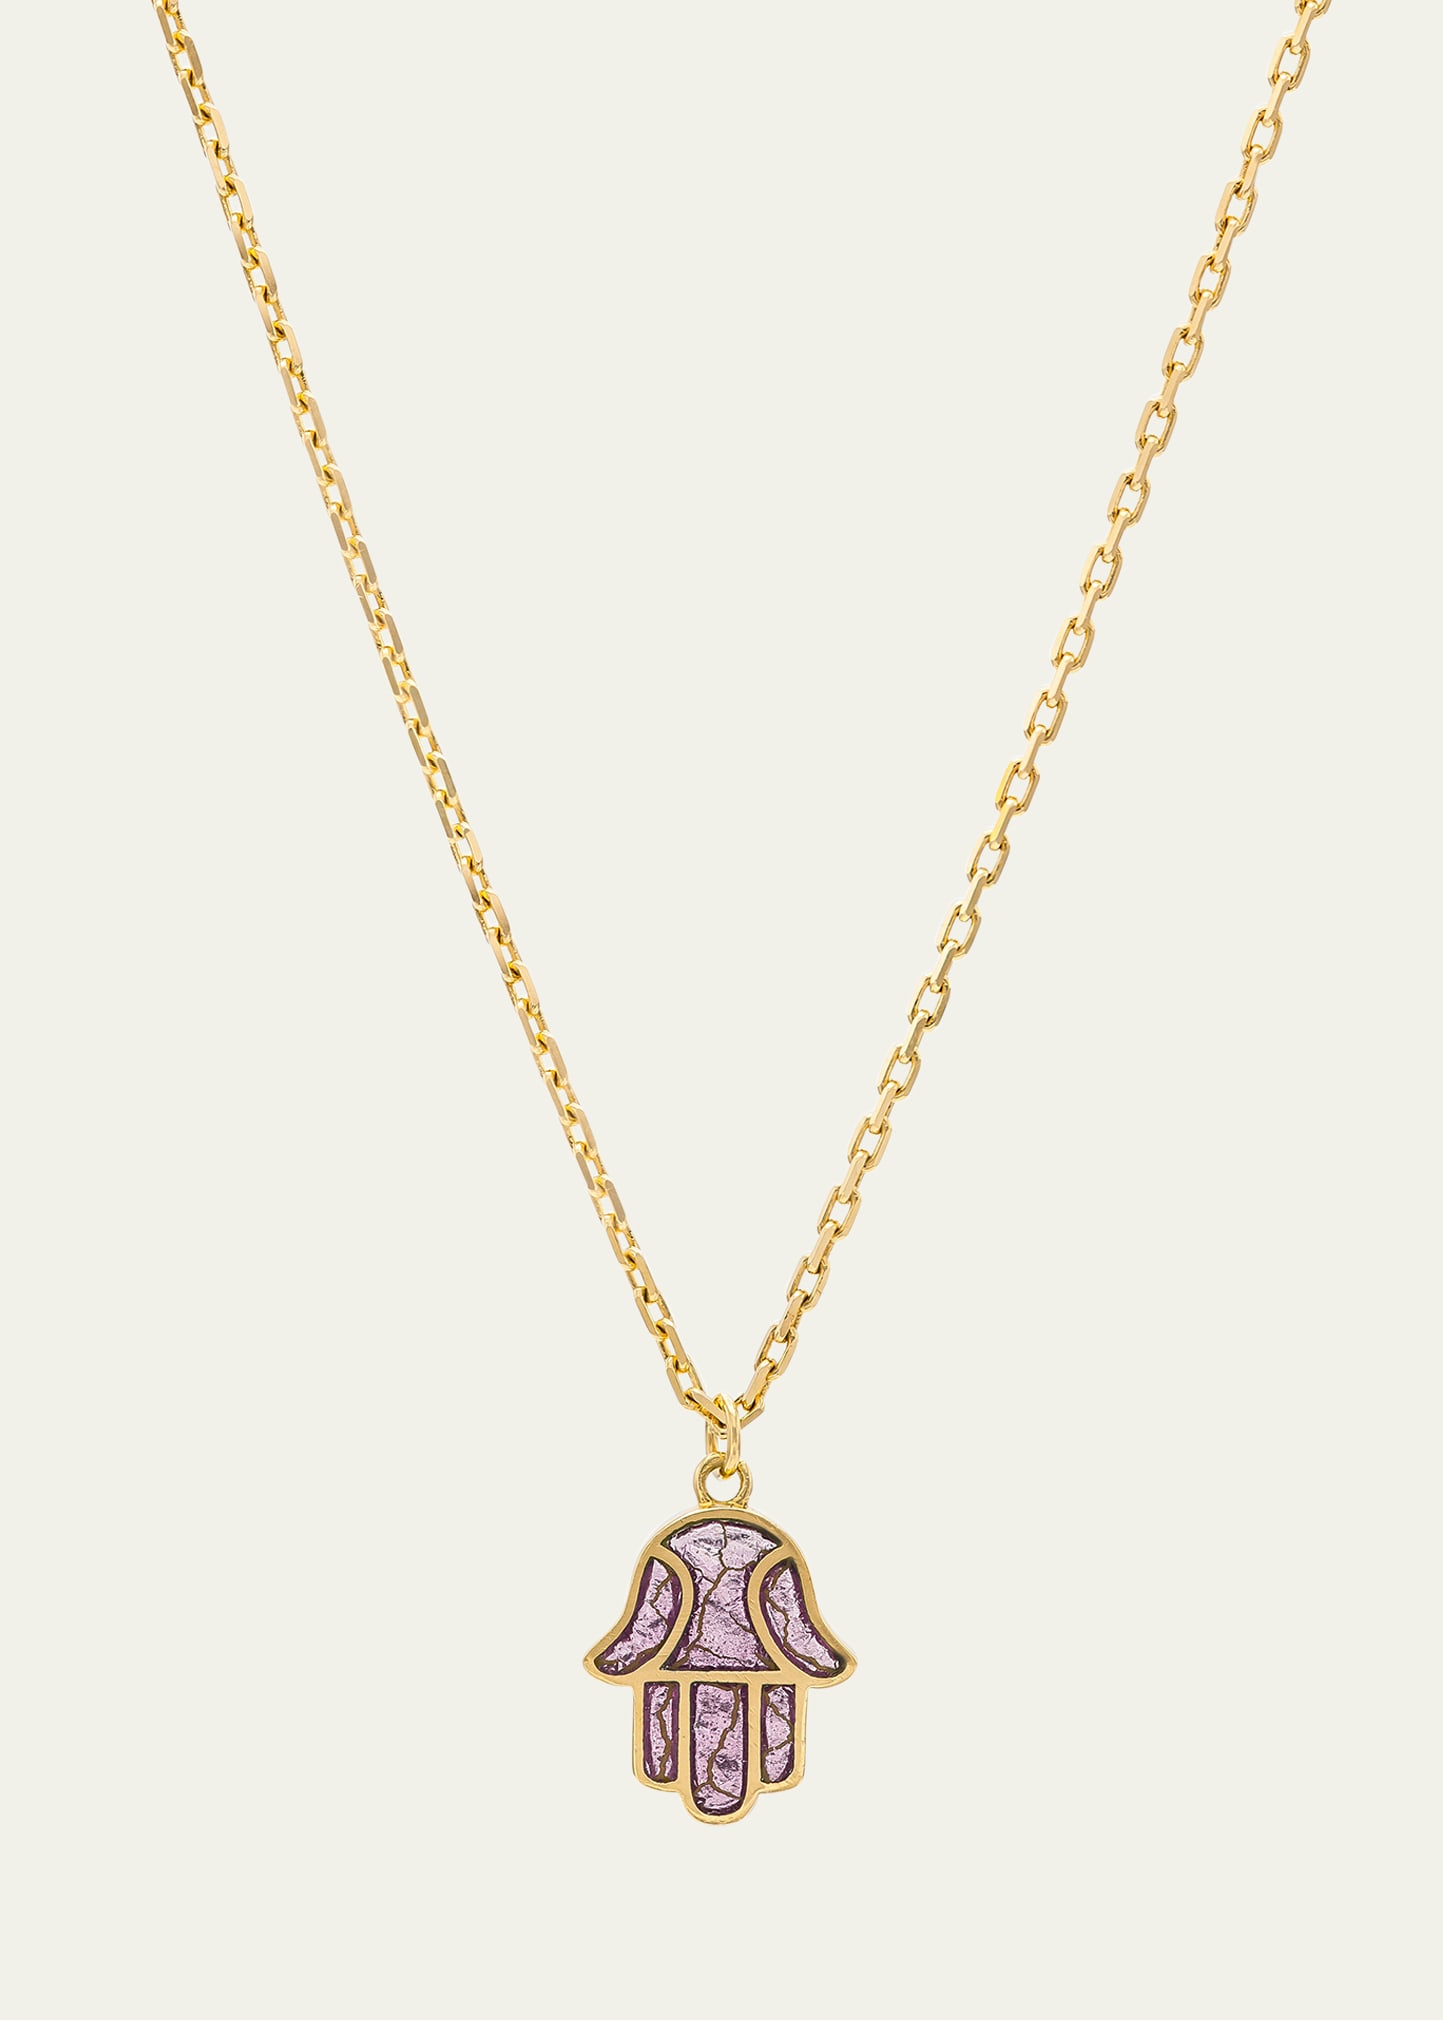 Audrey C. Jewels Hamsa Enamel Pendant Necklace In Gold